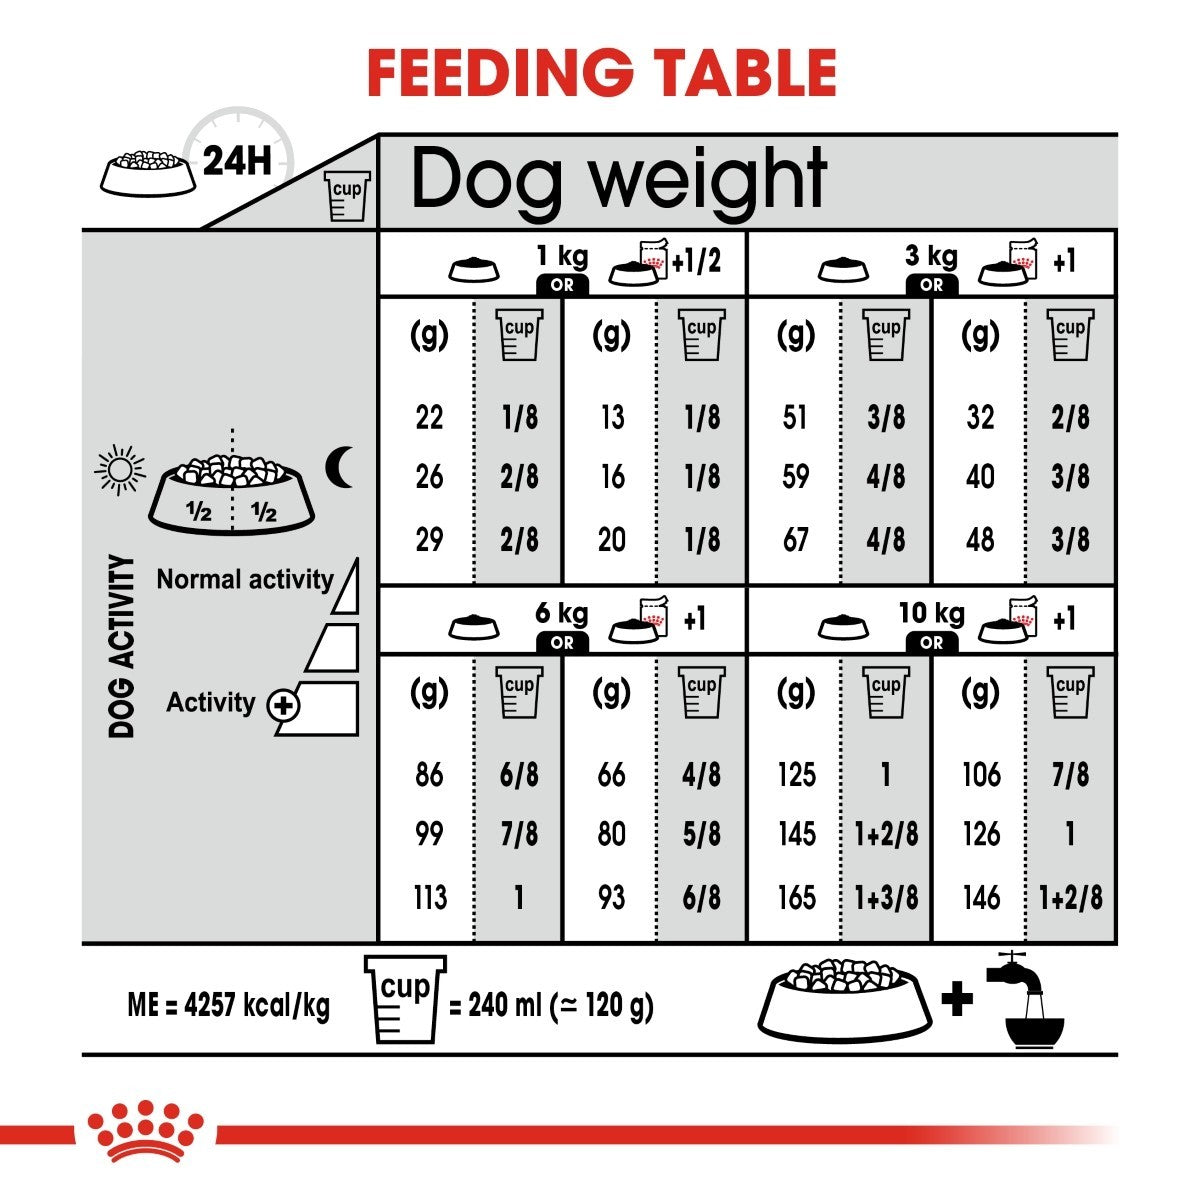 Royal Canin Mini Digestive Care Dry Dog Food - Targa Pet Shop